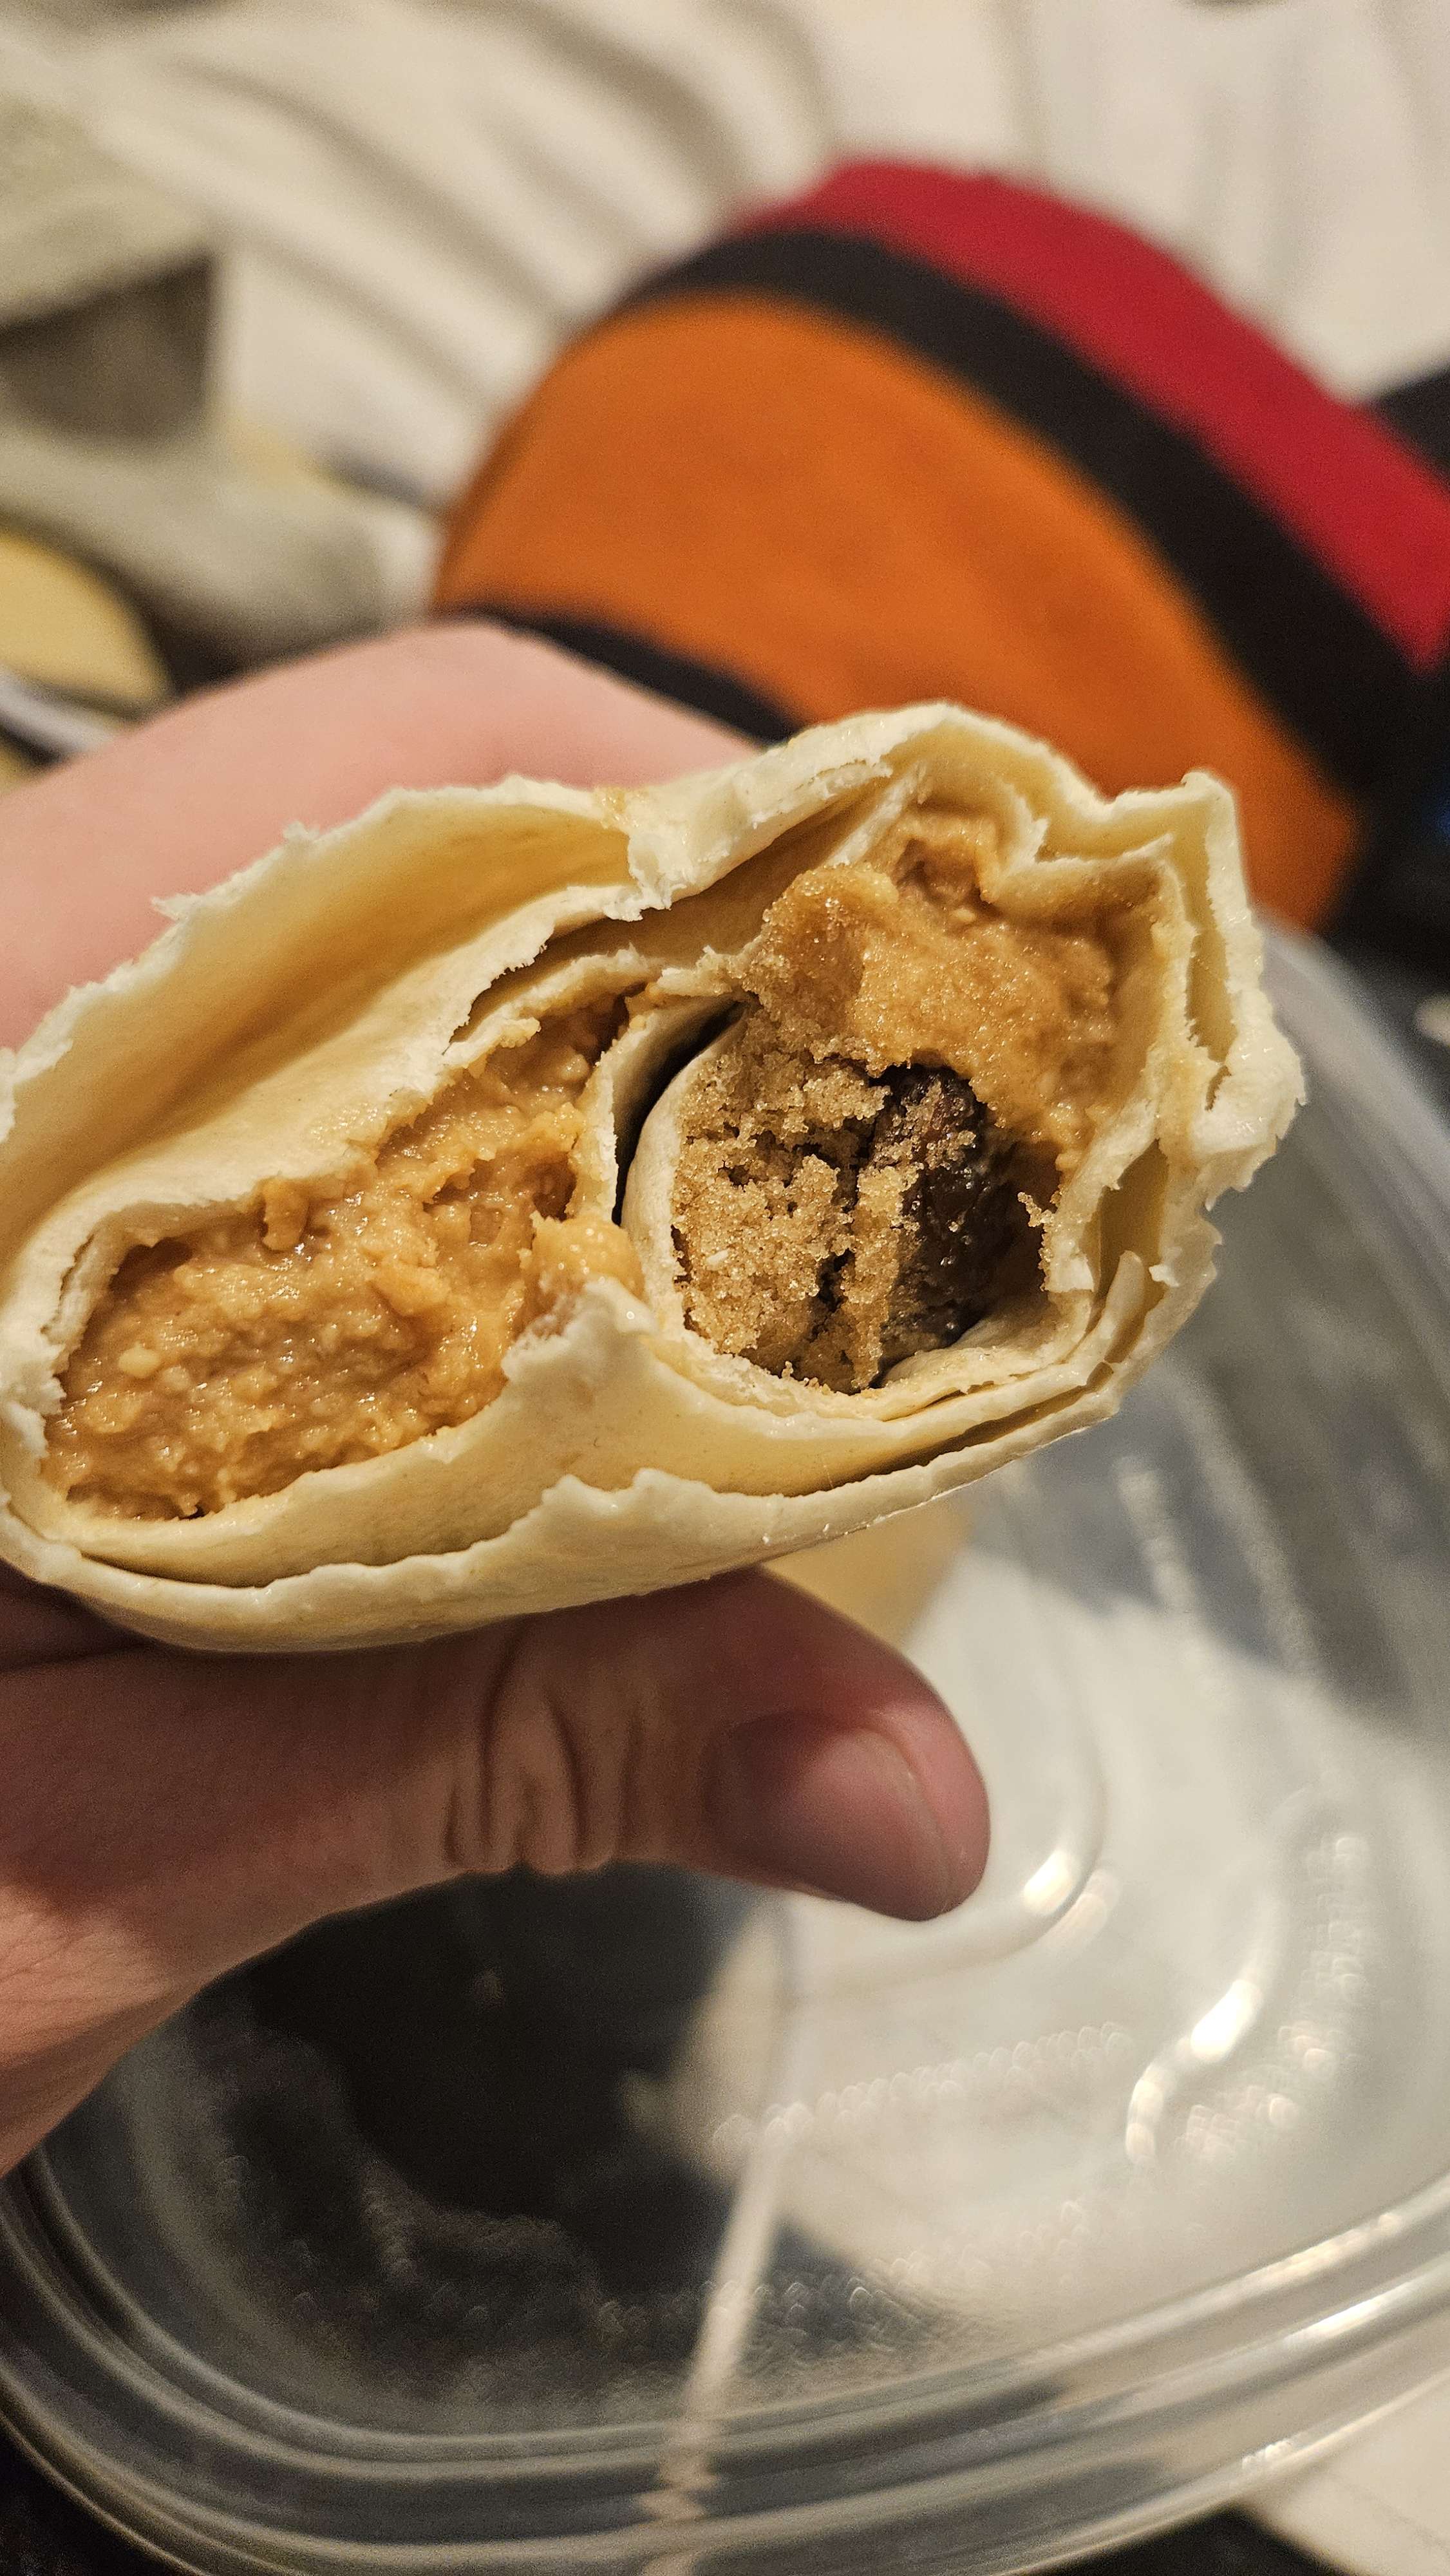 a tortilla wrapped around brown sugar, rasins, peanut butter